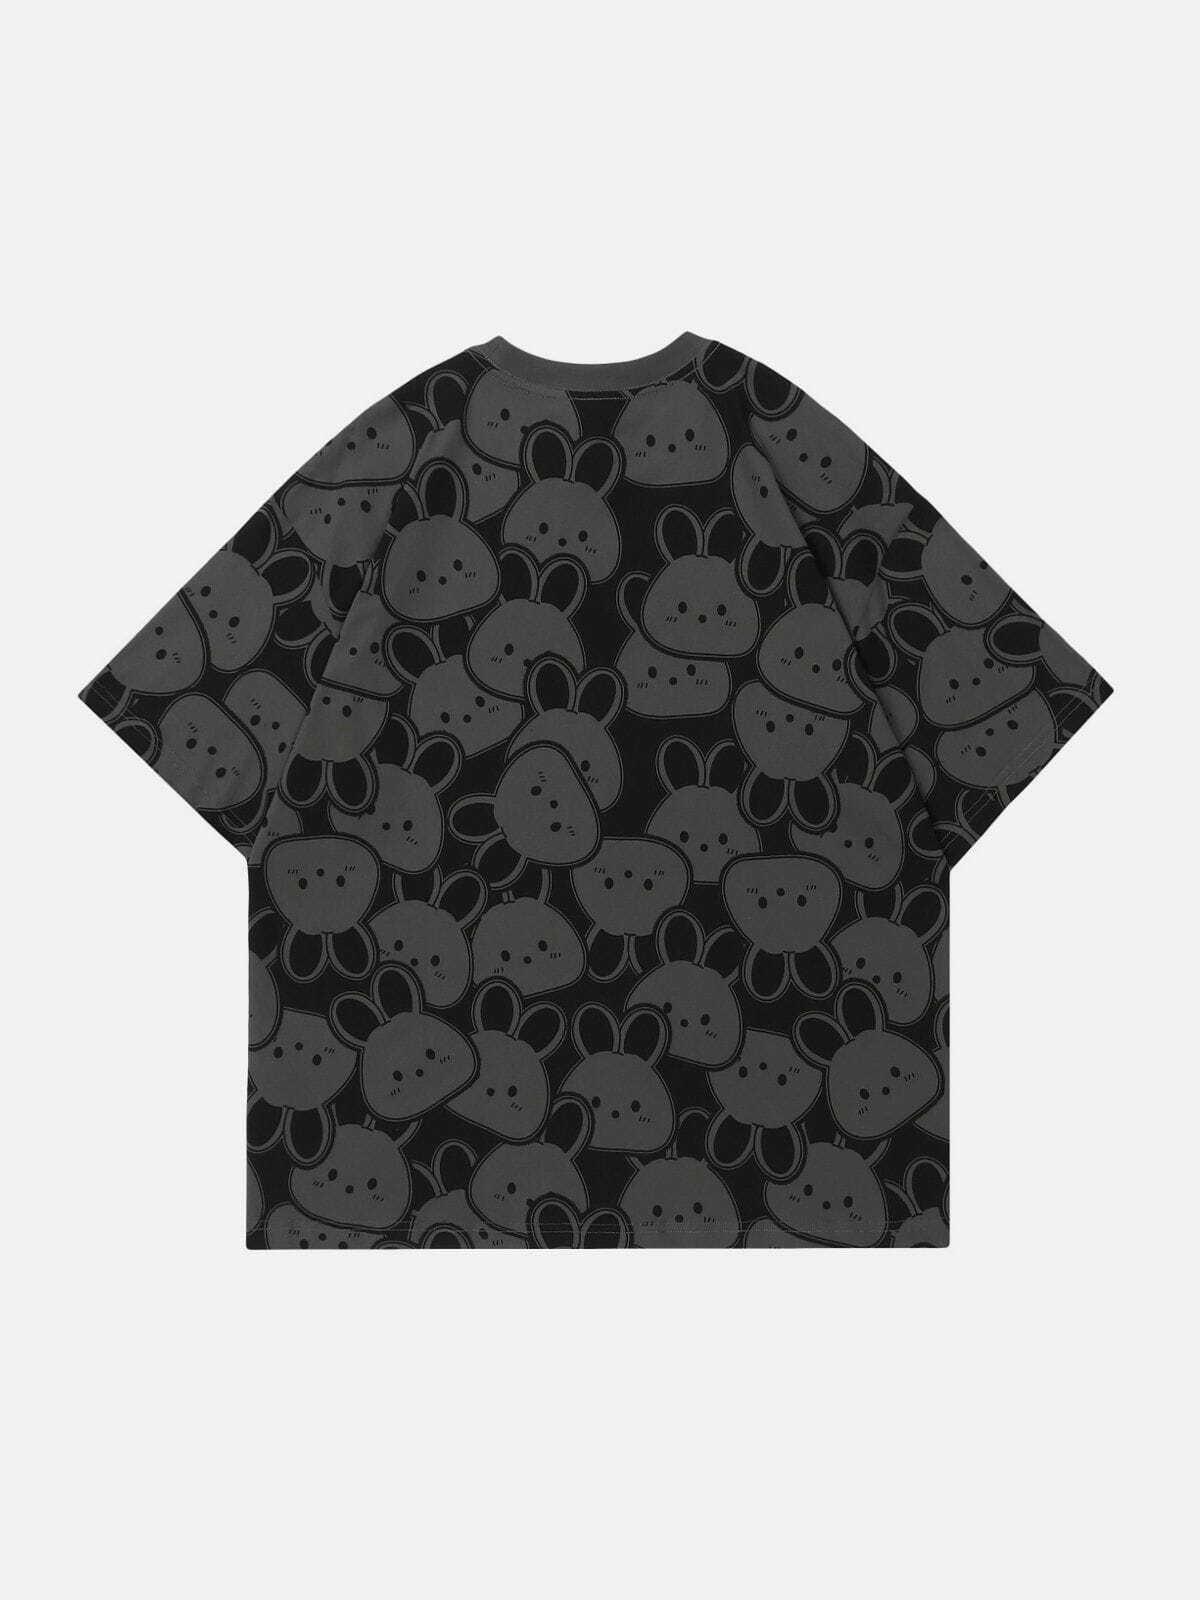 retro cartoon rabbit tee edgy  vibrant streetwear shirt 8679